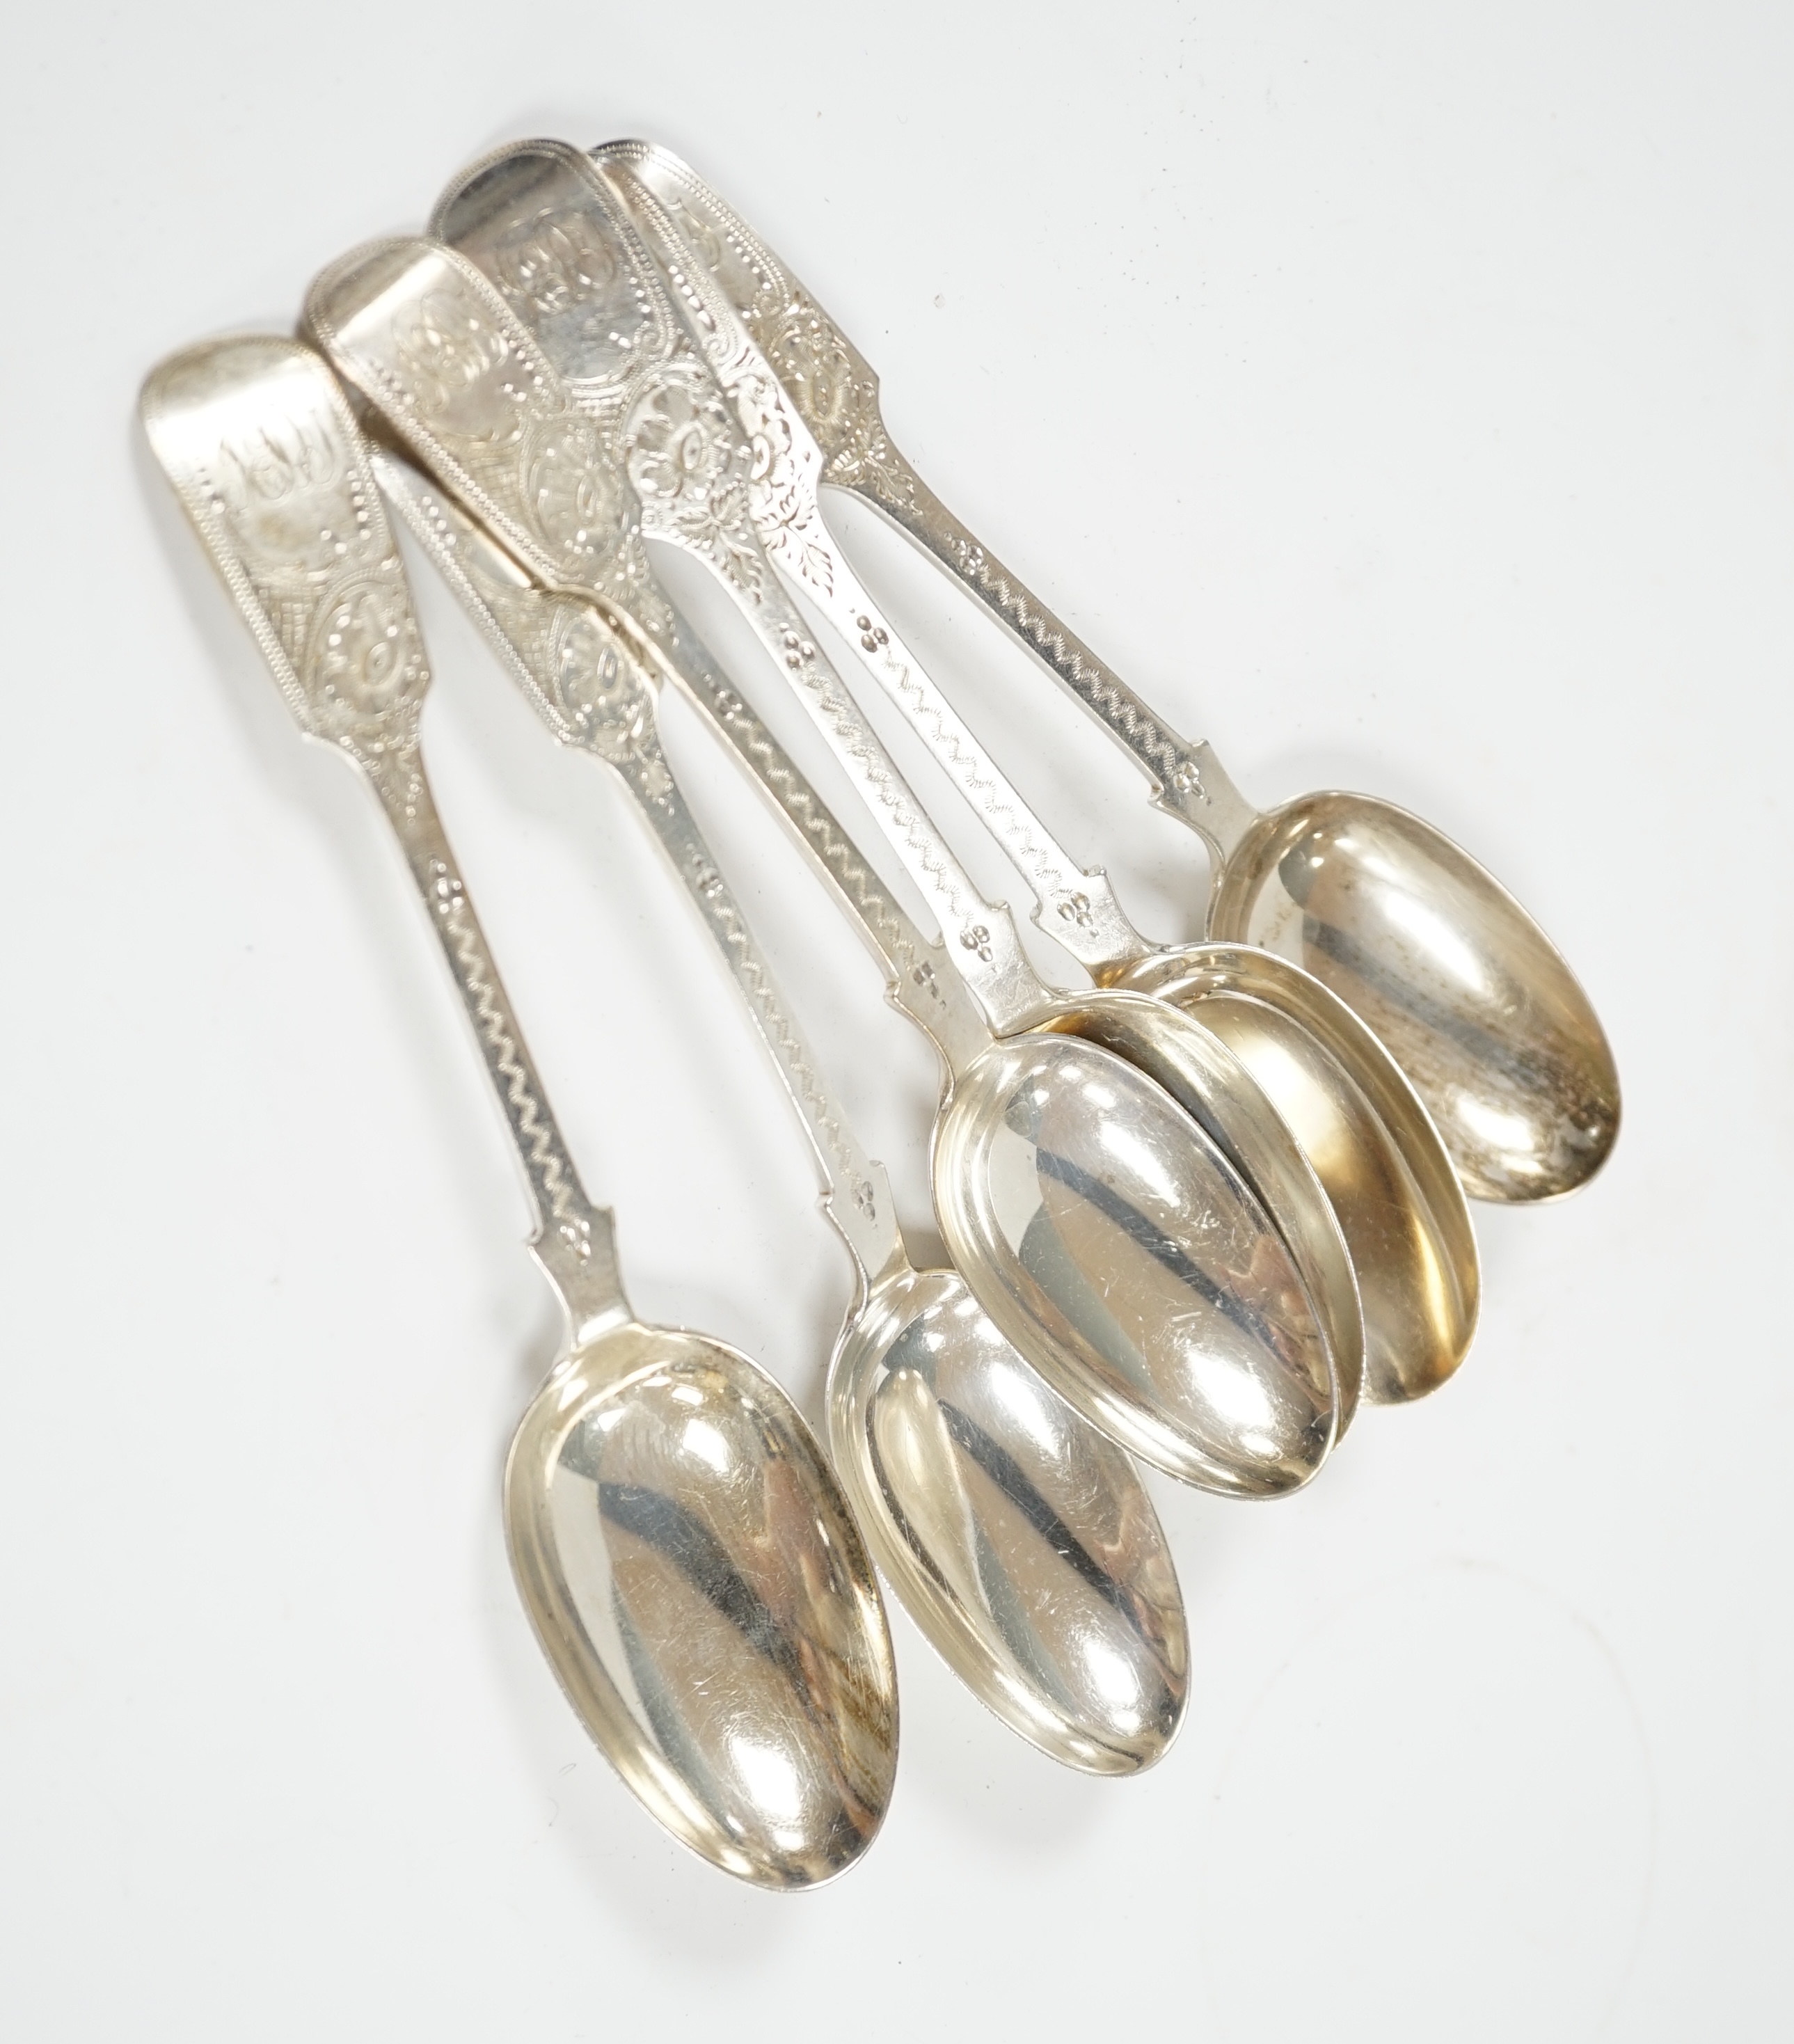 A set of six Edwardian bright cut engraved silver dessert spoons, Charles T. Maine Ltd, London, 1909, 17cm, 7.8oz. Condition - fair